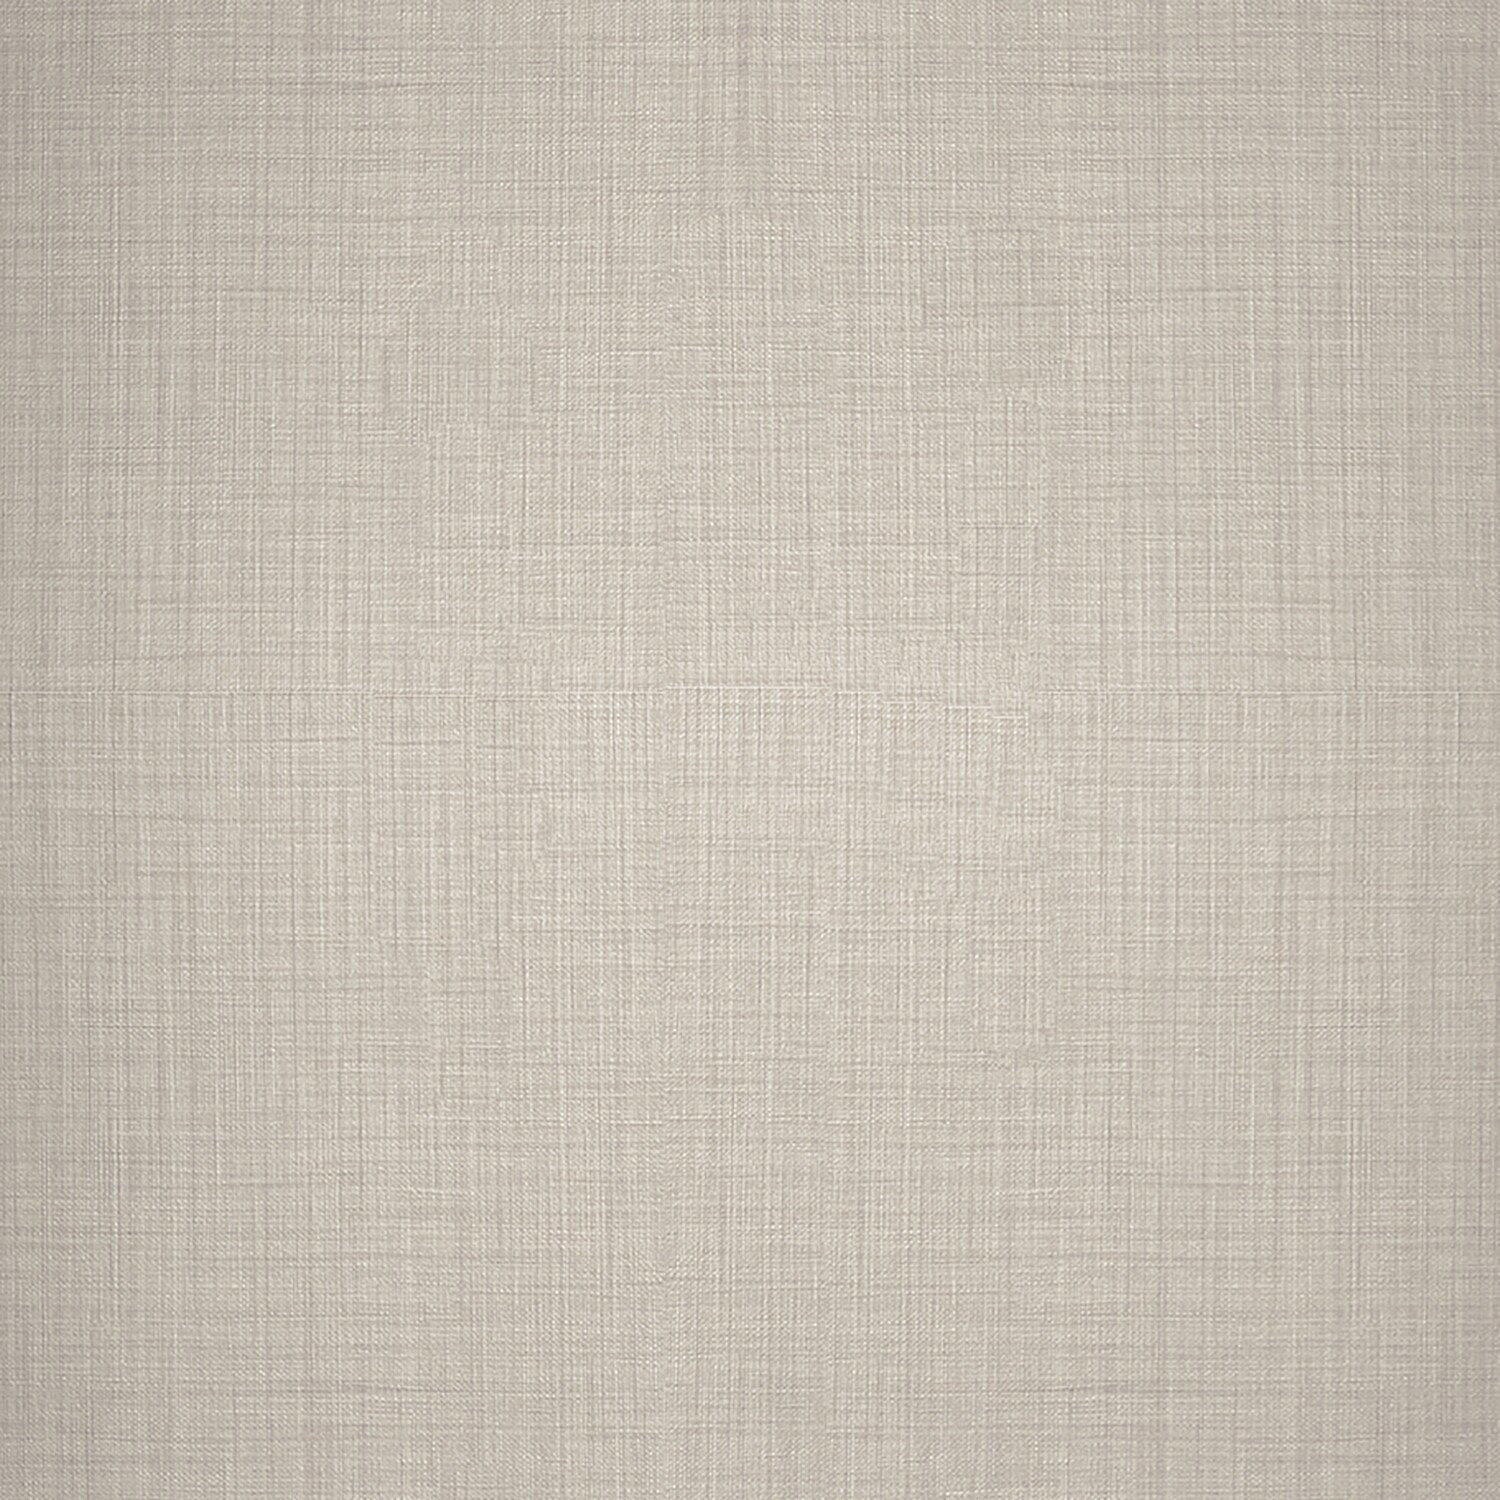 Grey textile panel